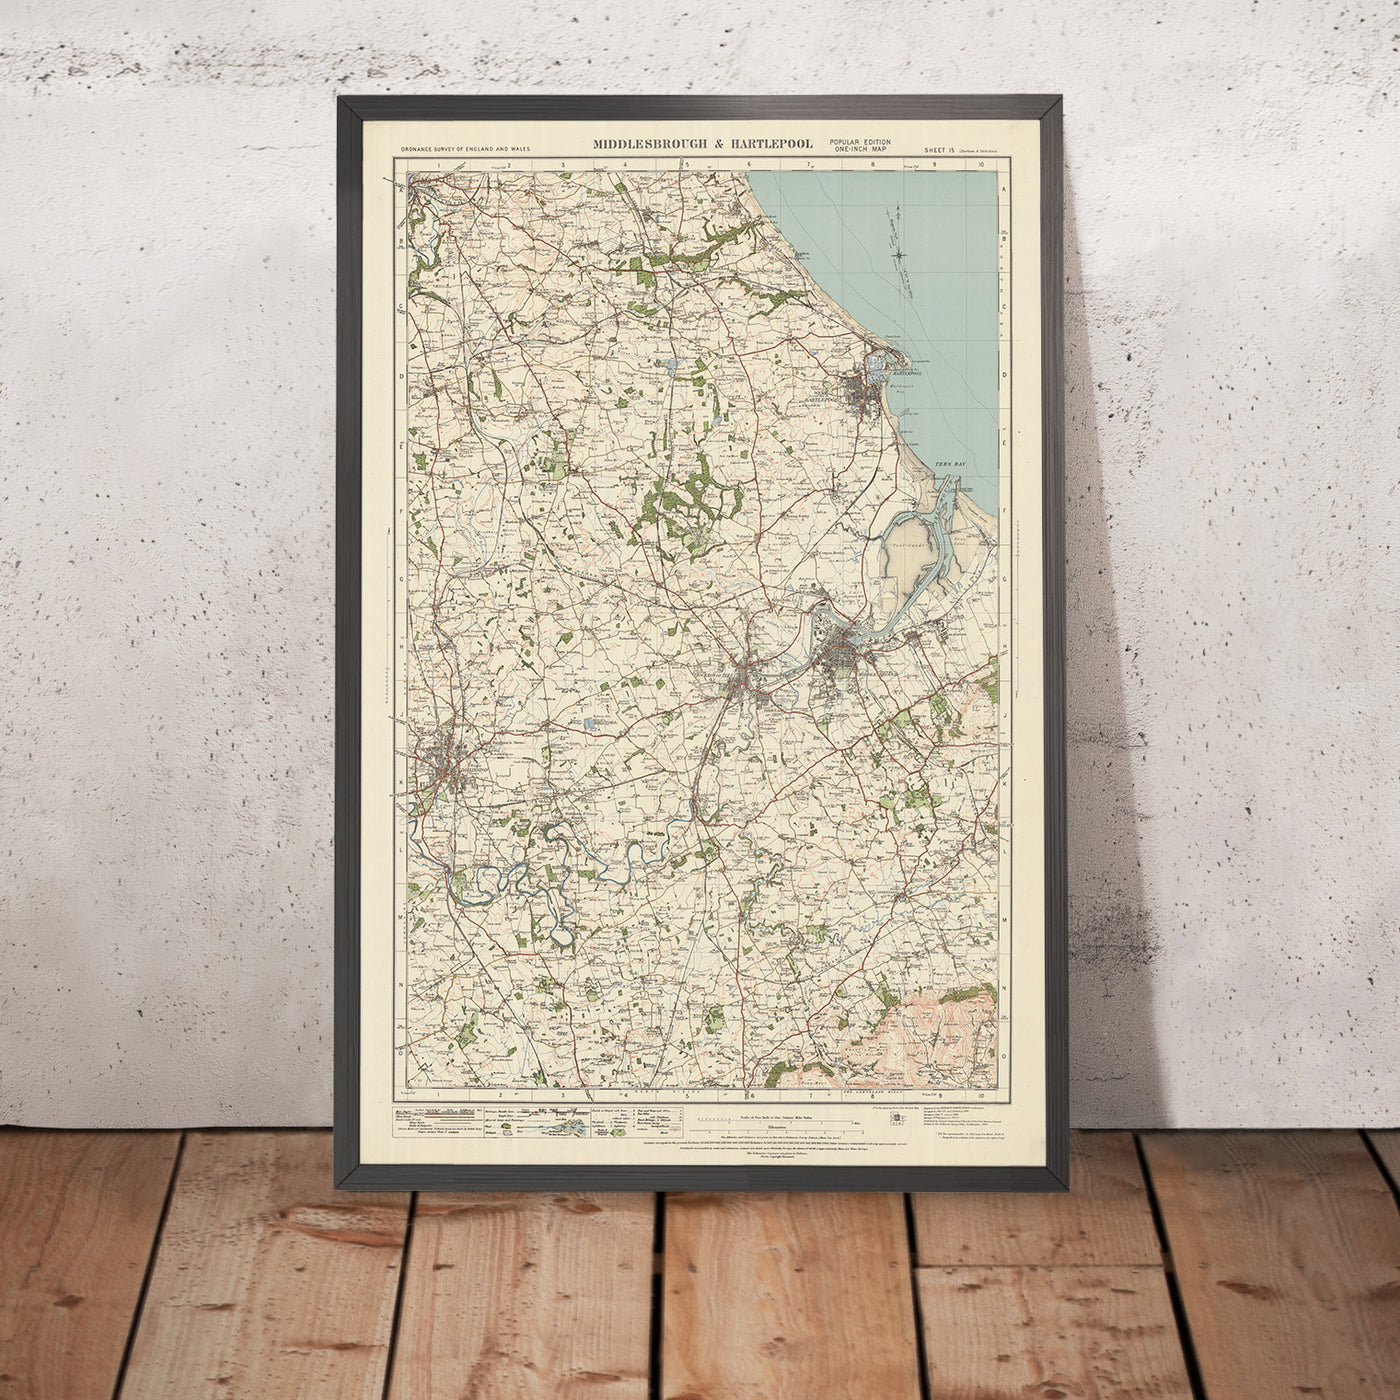 Old Ordnance Survey Map, Sheet 15 - Middlesbrough & Hartlepool, 1925: Durham, Thornaby, Seaton Carew, Darlington, Stockton-on-Tees